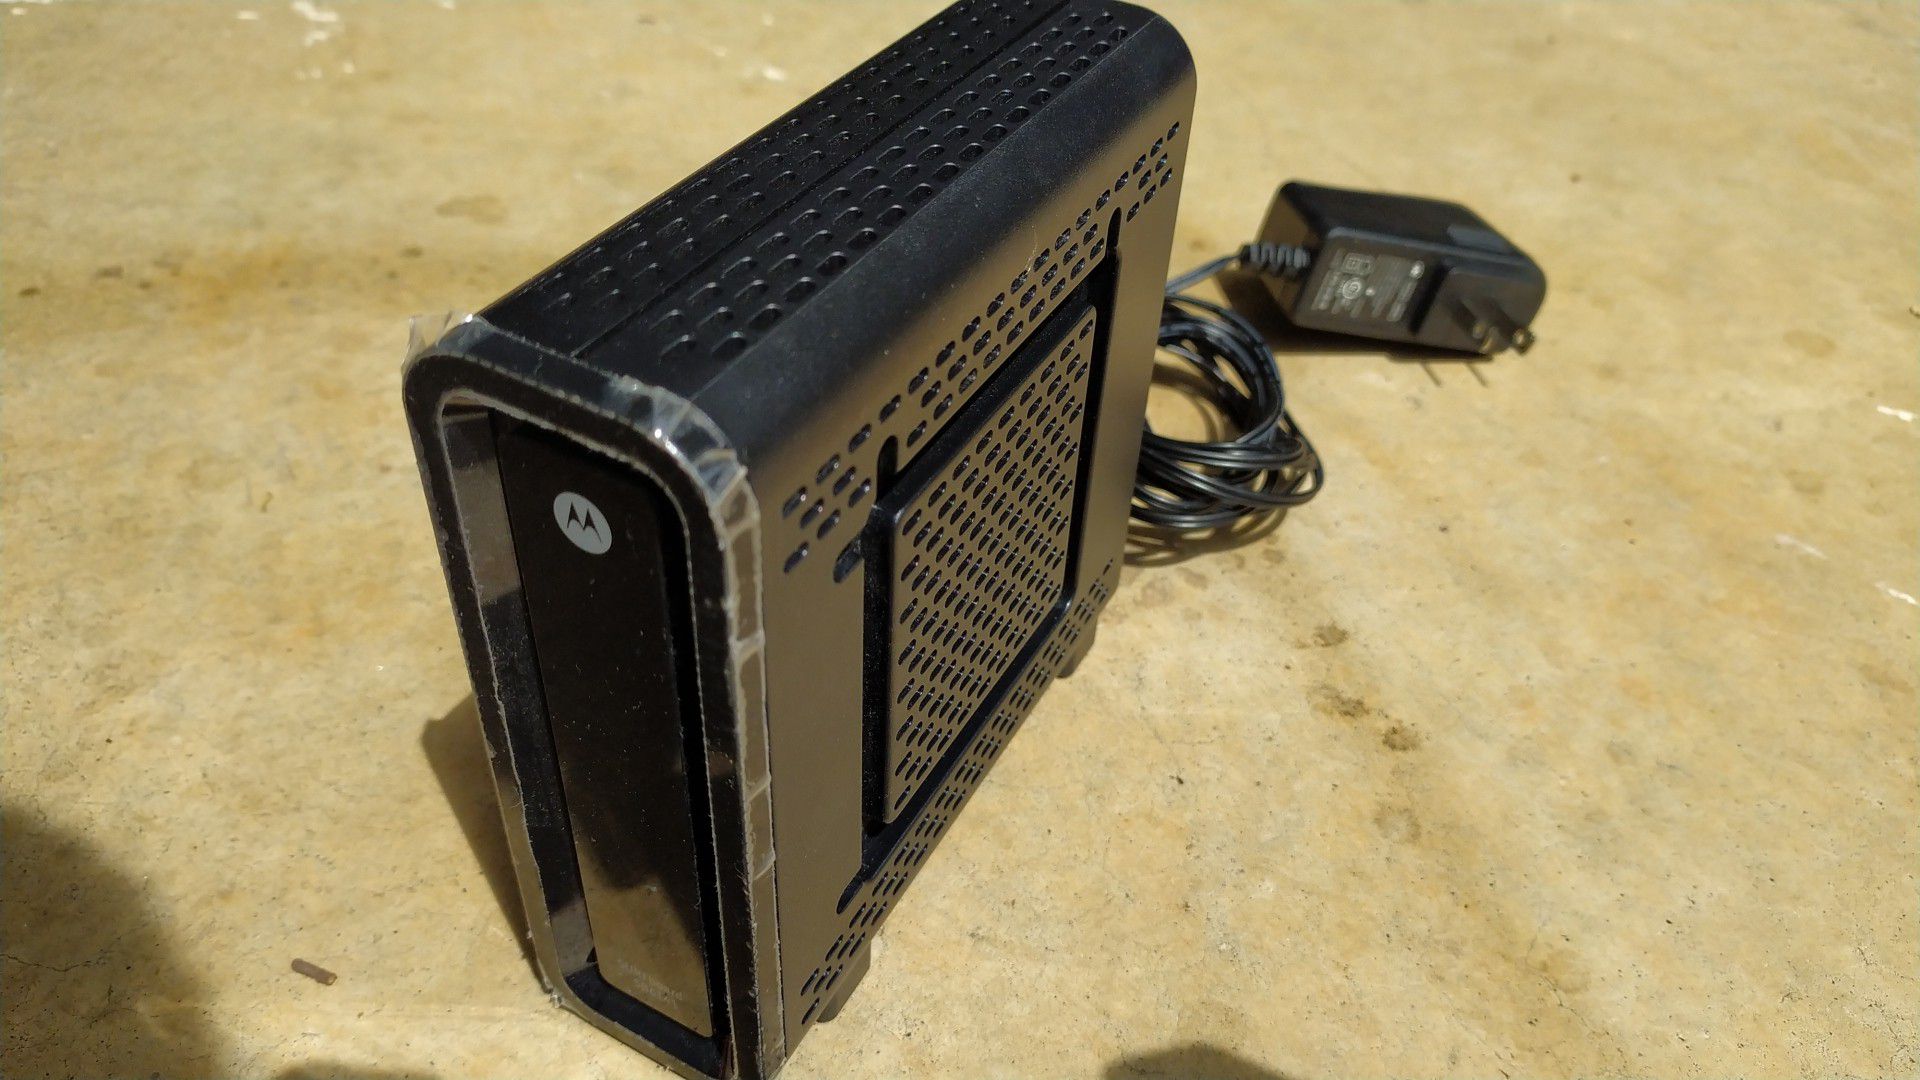 Motorola SB6141 comcast Modem